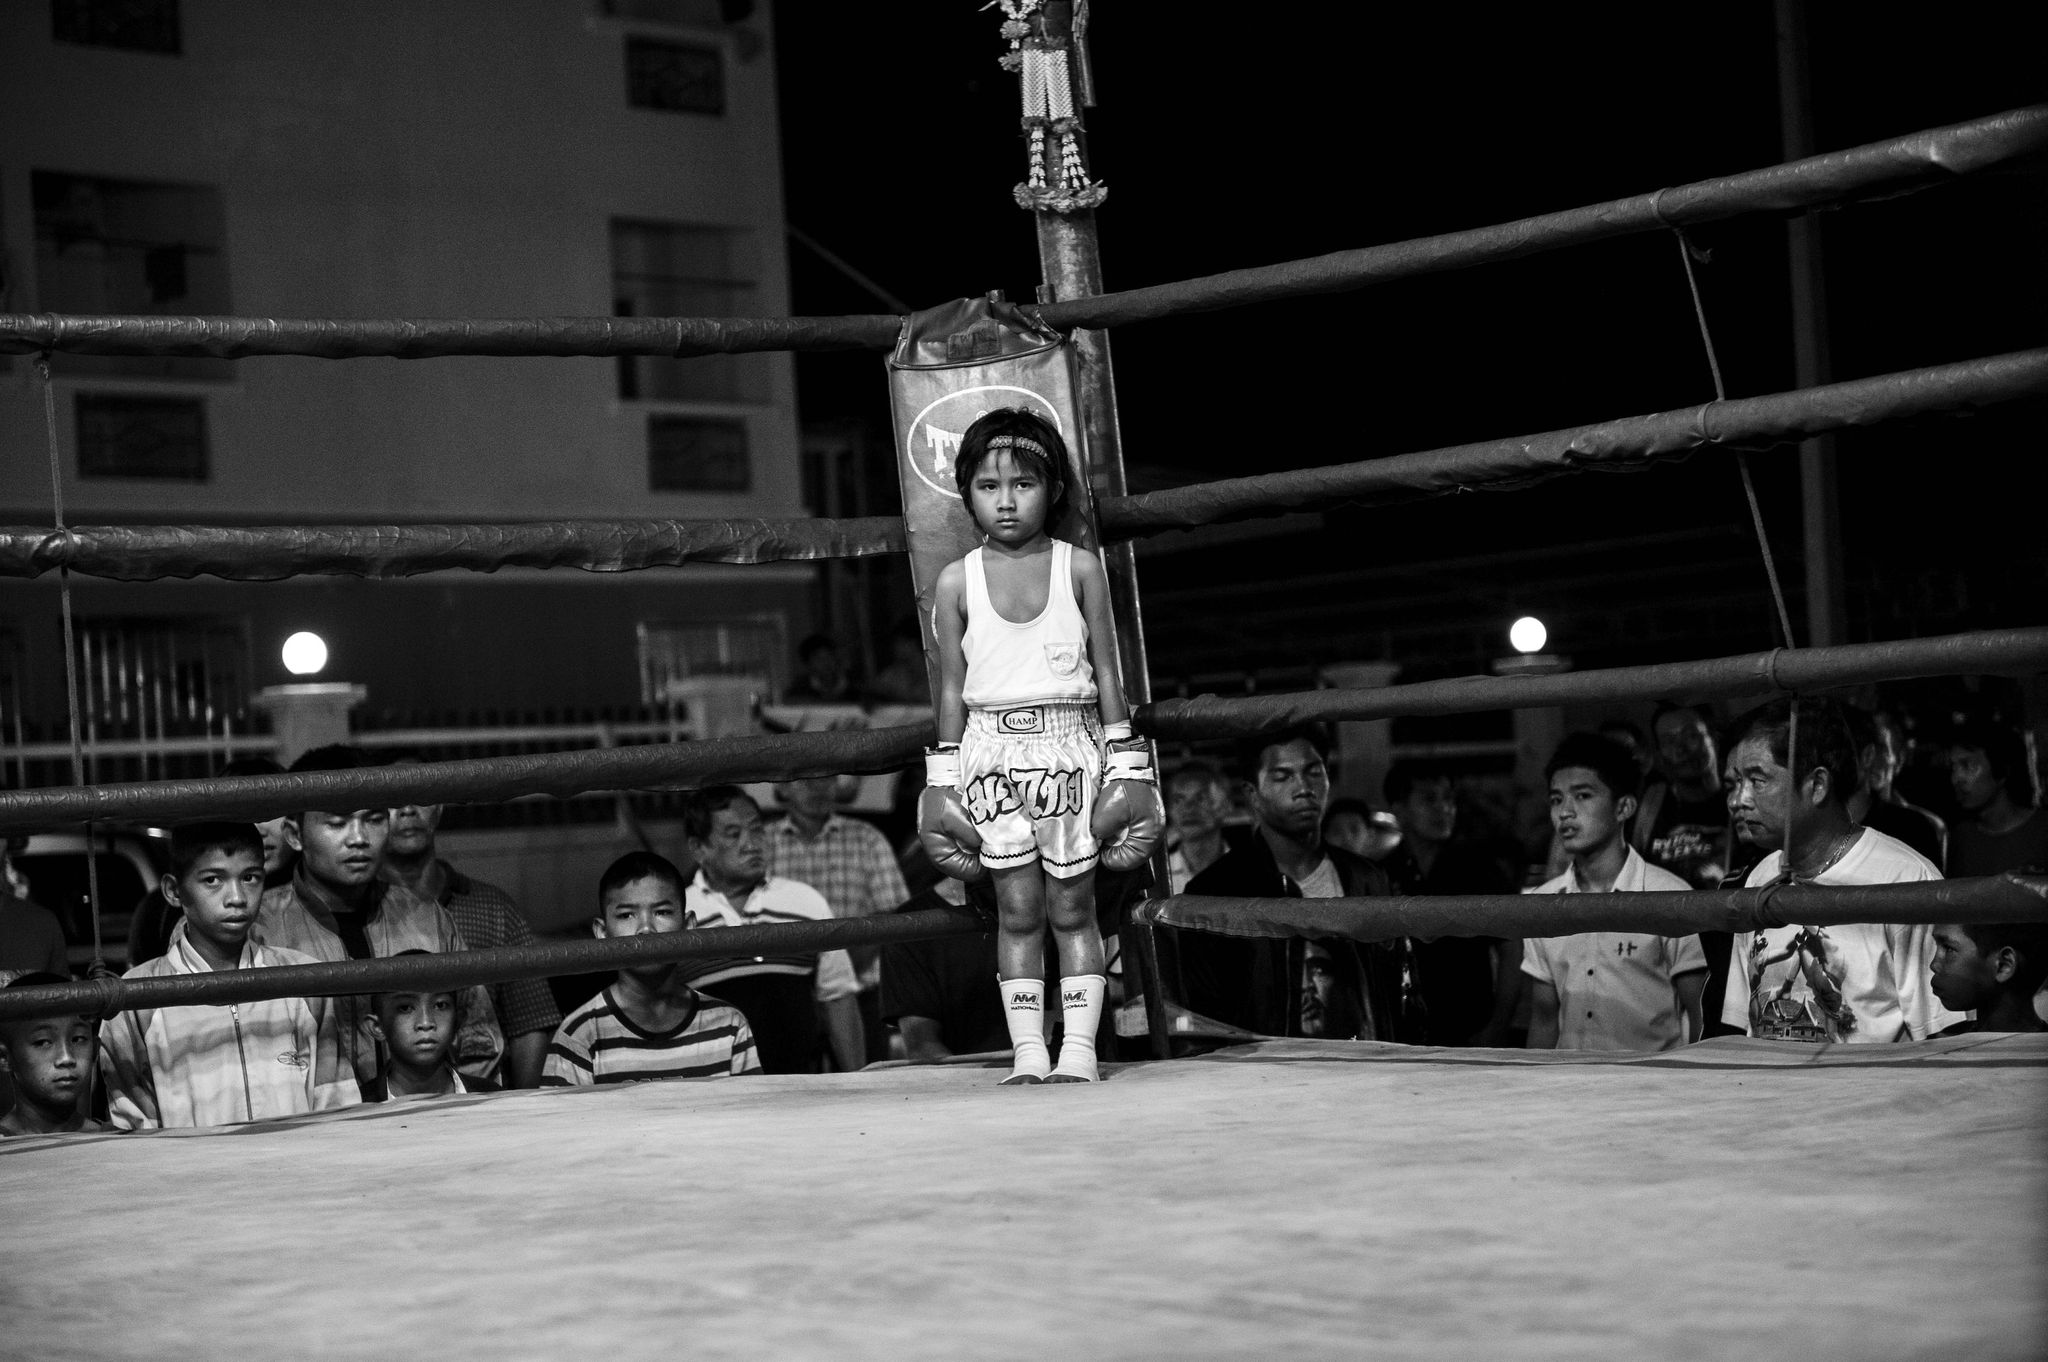 Sandra Hoyn, bambine boxe tailandese,